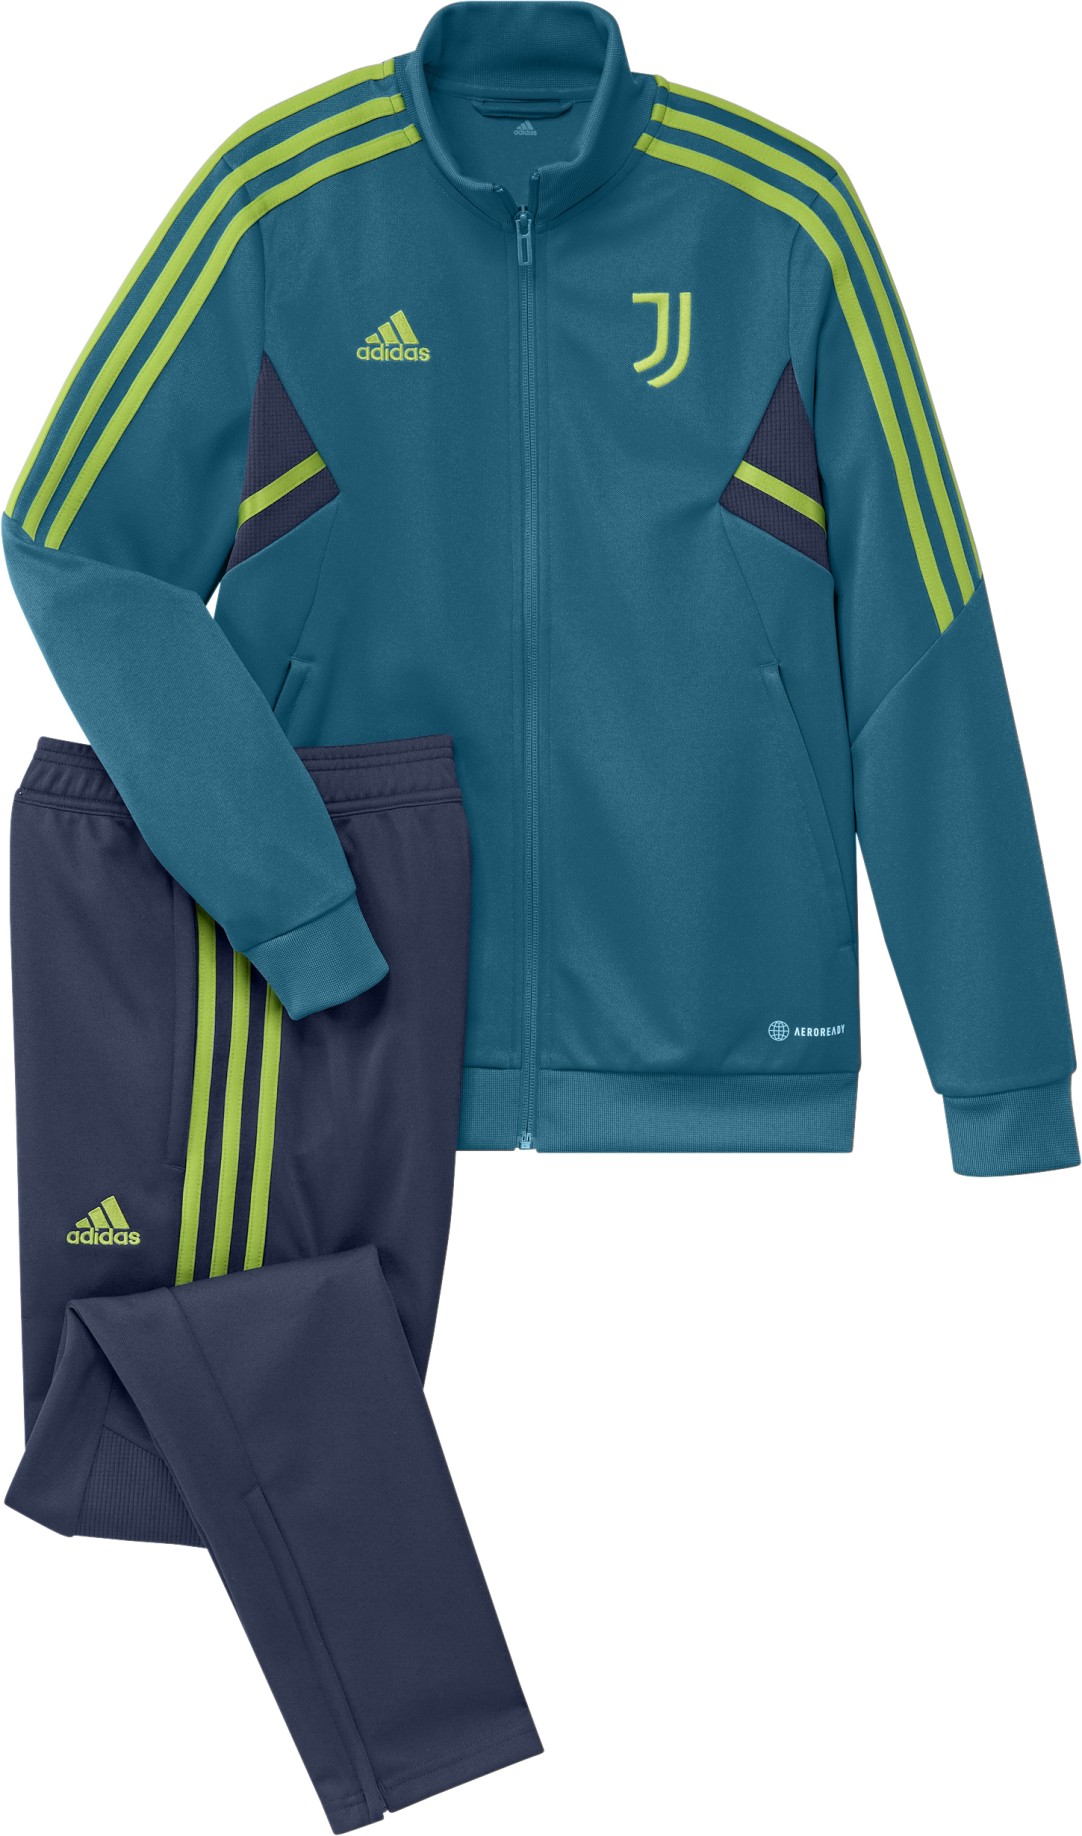 muy agradable simpático ganancia Tuta Junior Juventus Allenamento colore azul - Adidas - SportIT.com